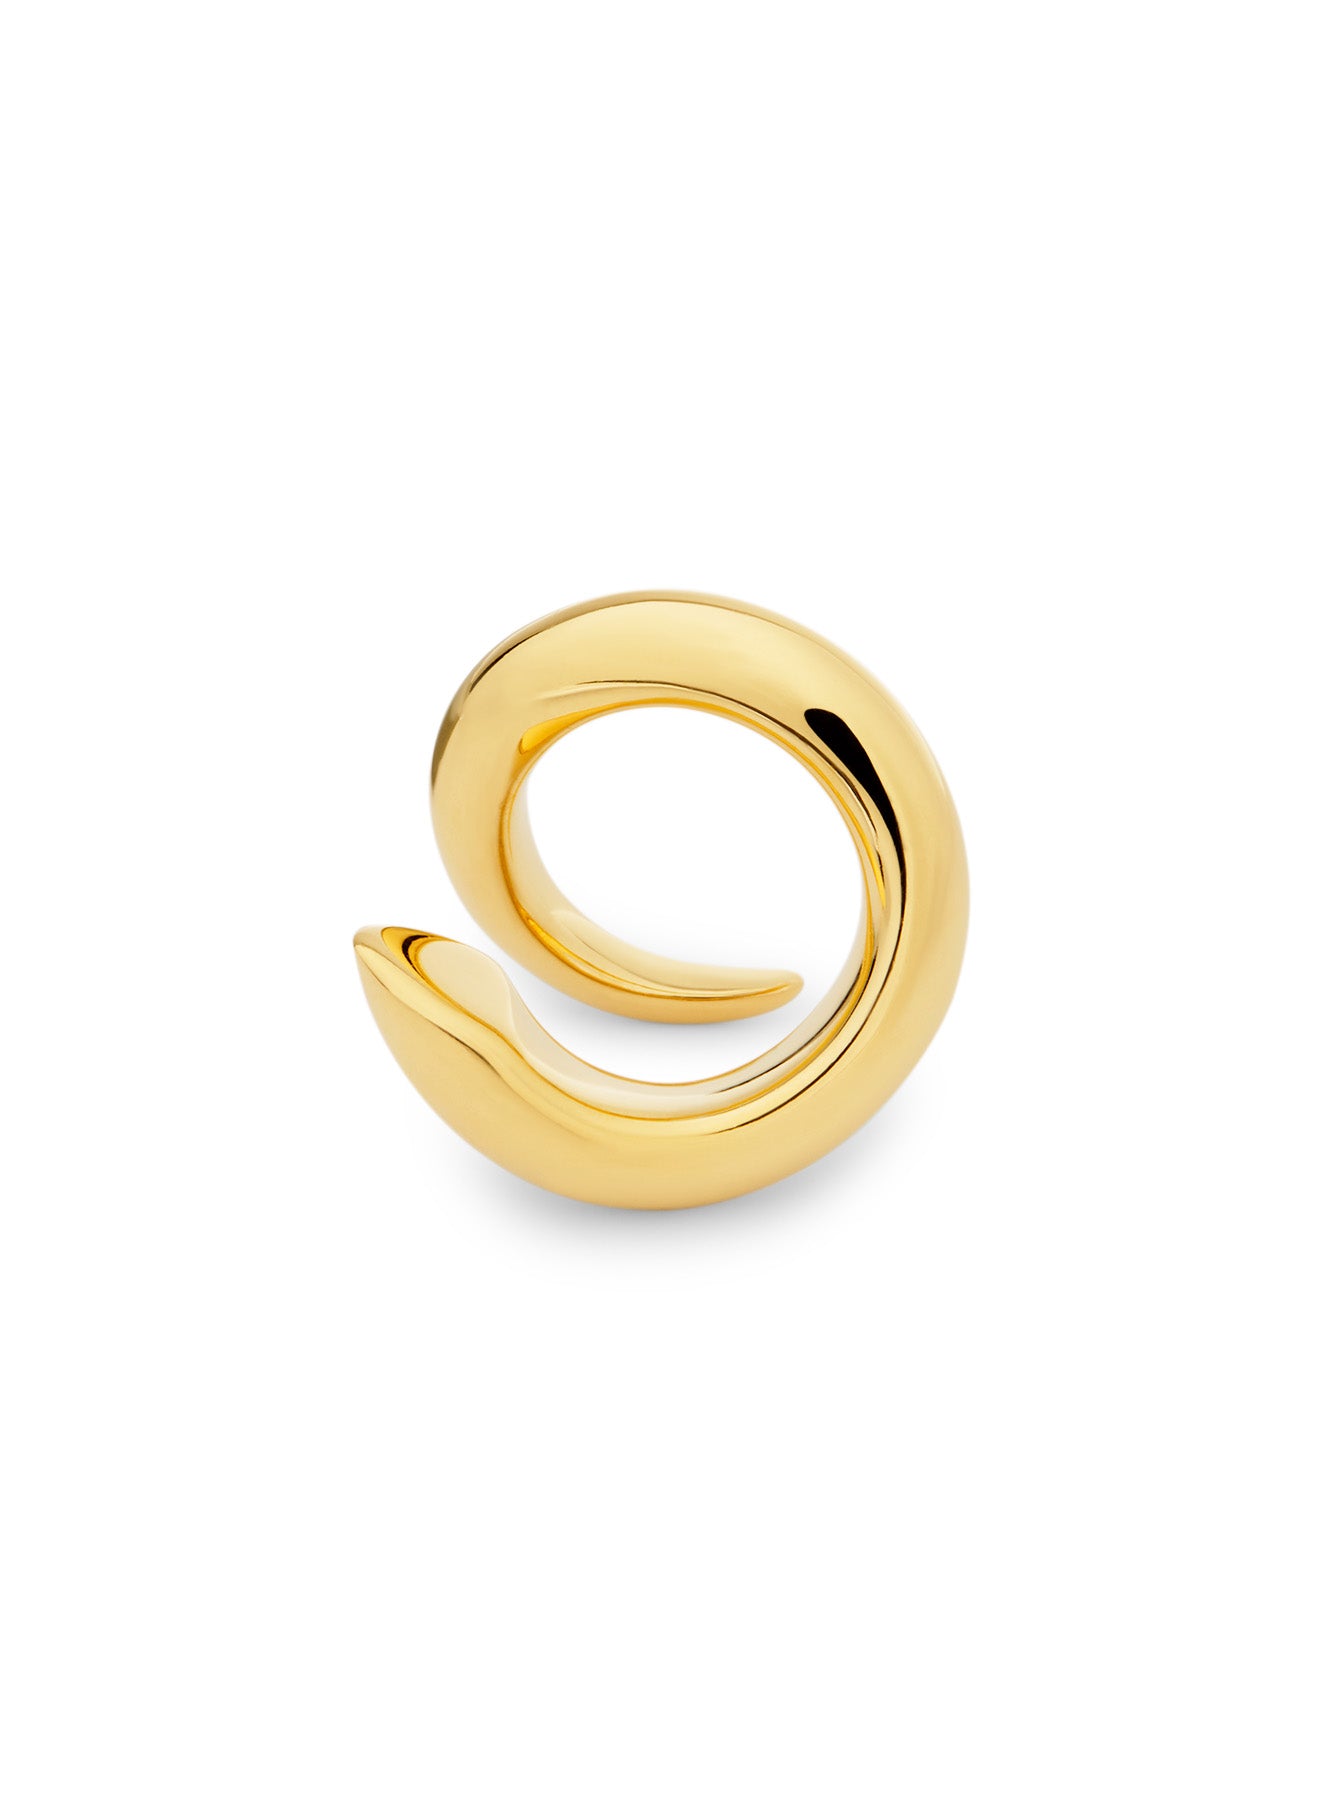 Gold spiral ring